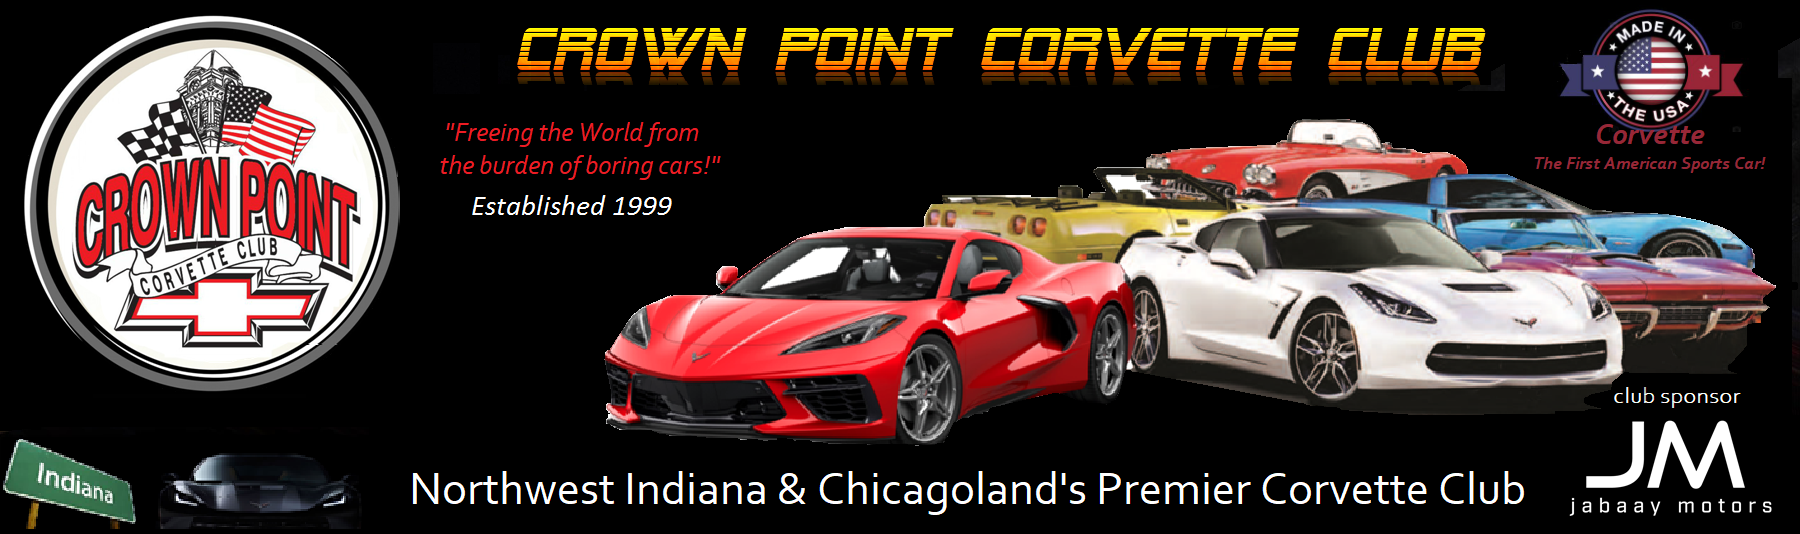 Crown Point Corvette Club